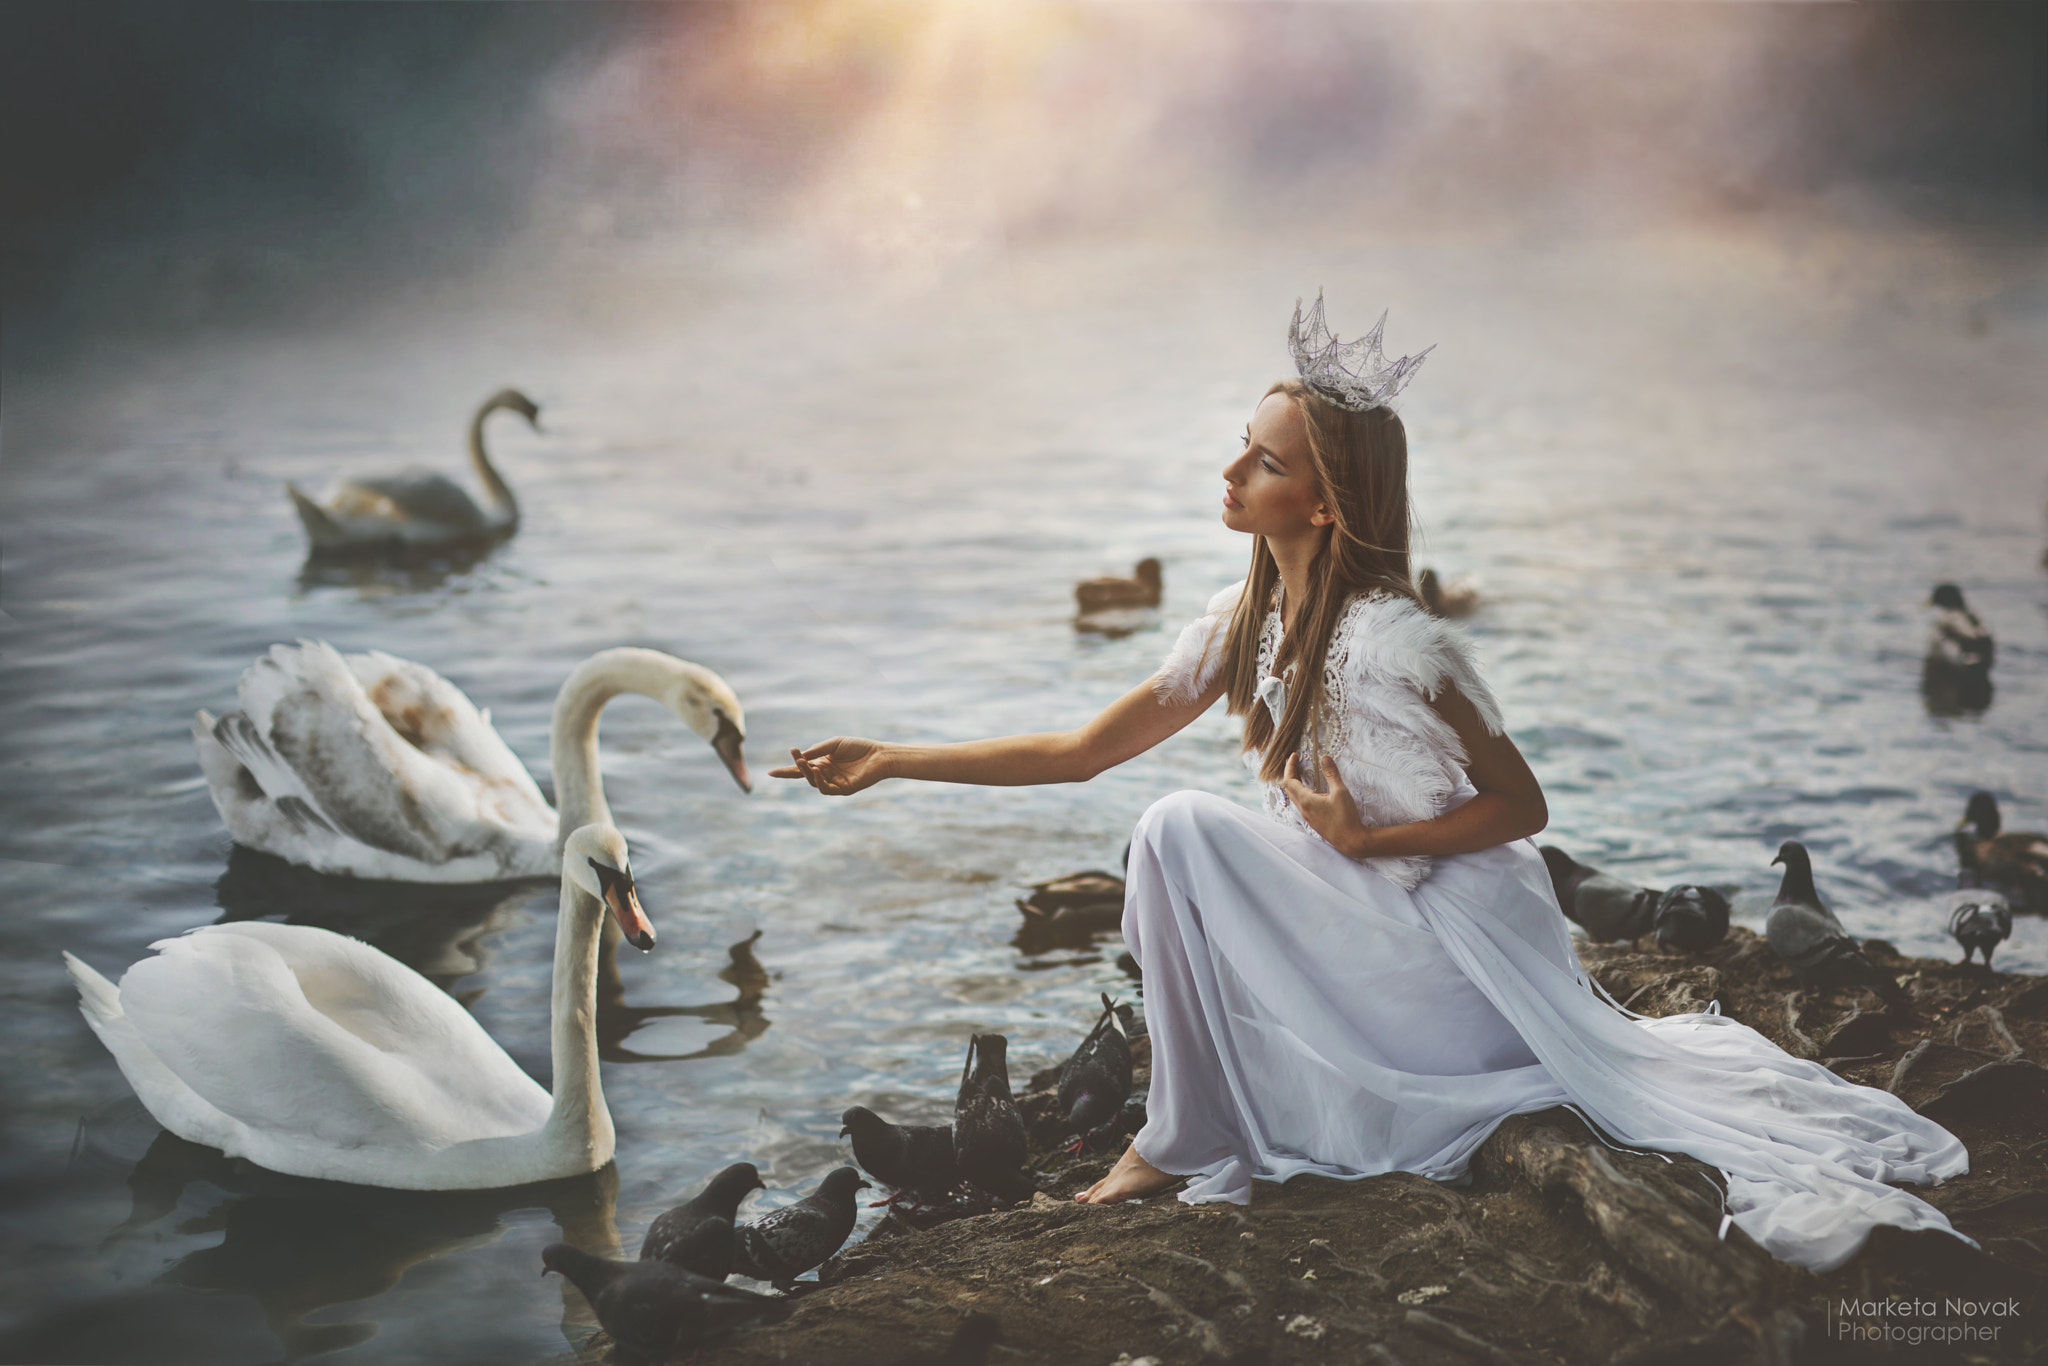 People 2048x1366 Marketa Novak model fantasy girl crown women swans animals